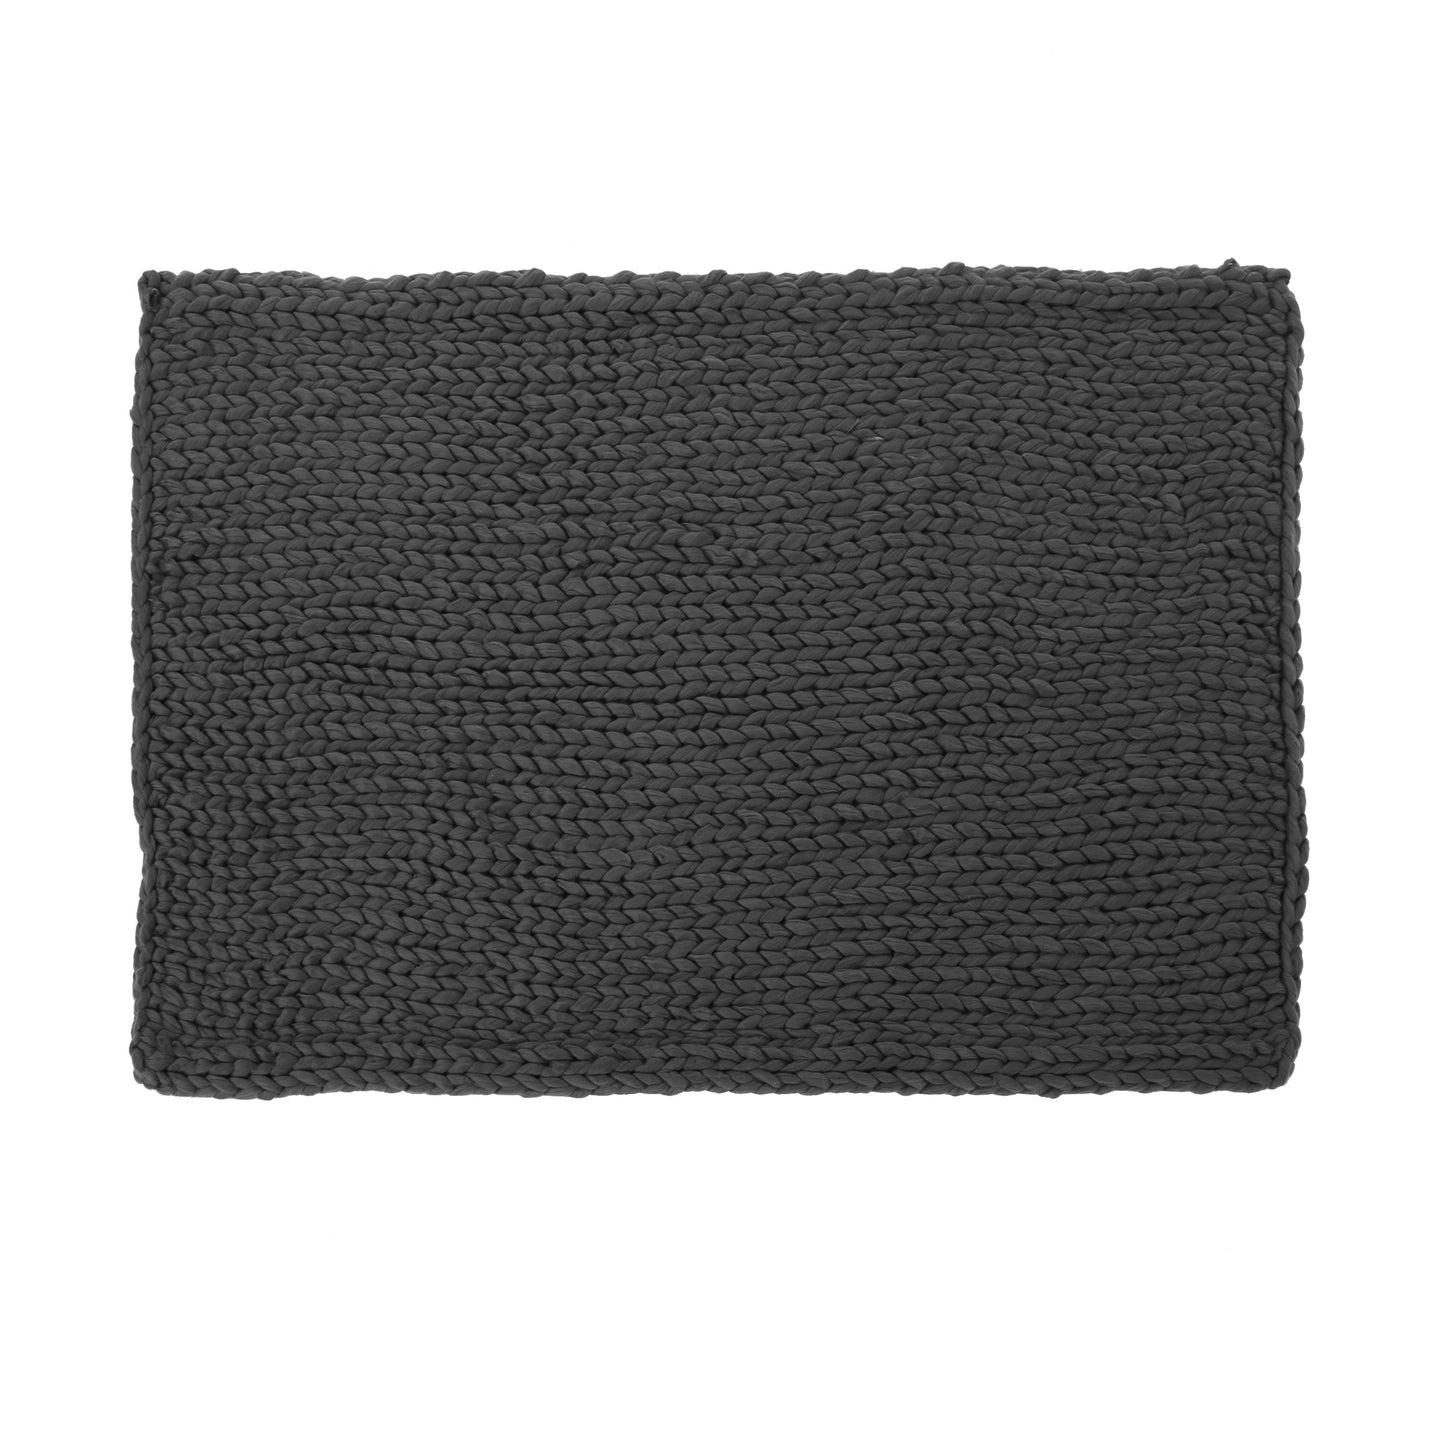 Jacqueline Modern Knit Stitch Fabric Rectangle Throw Blanket